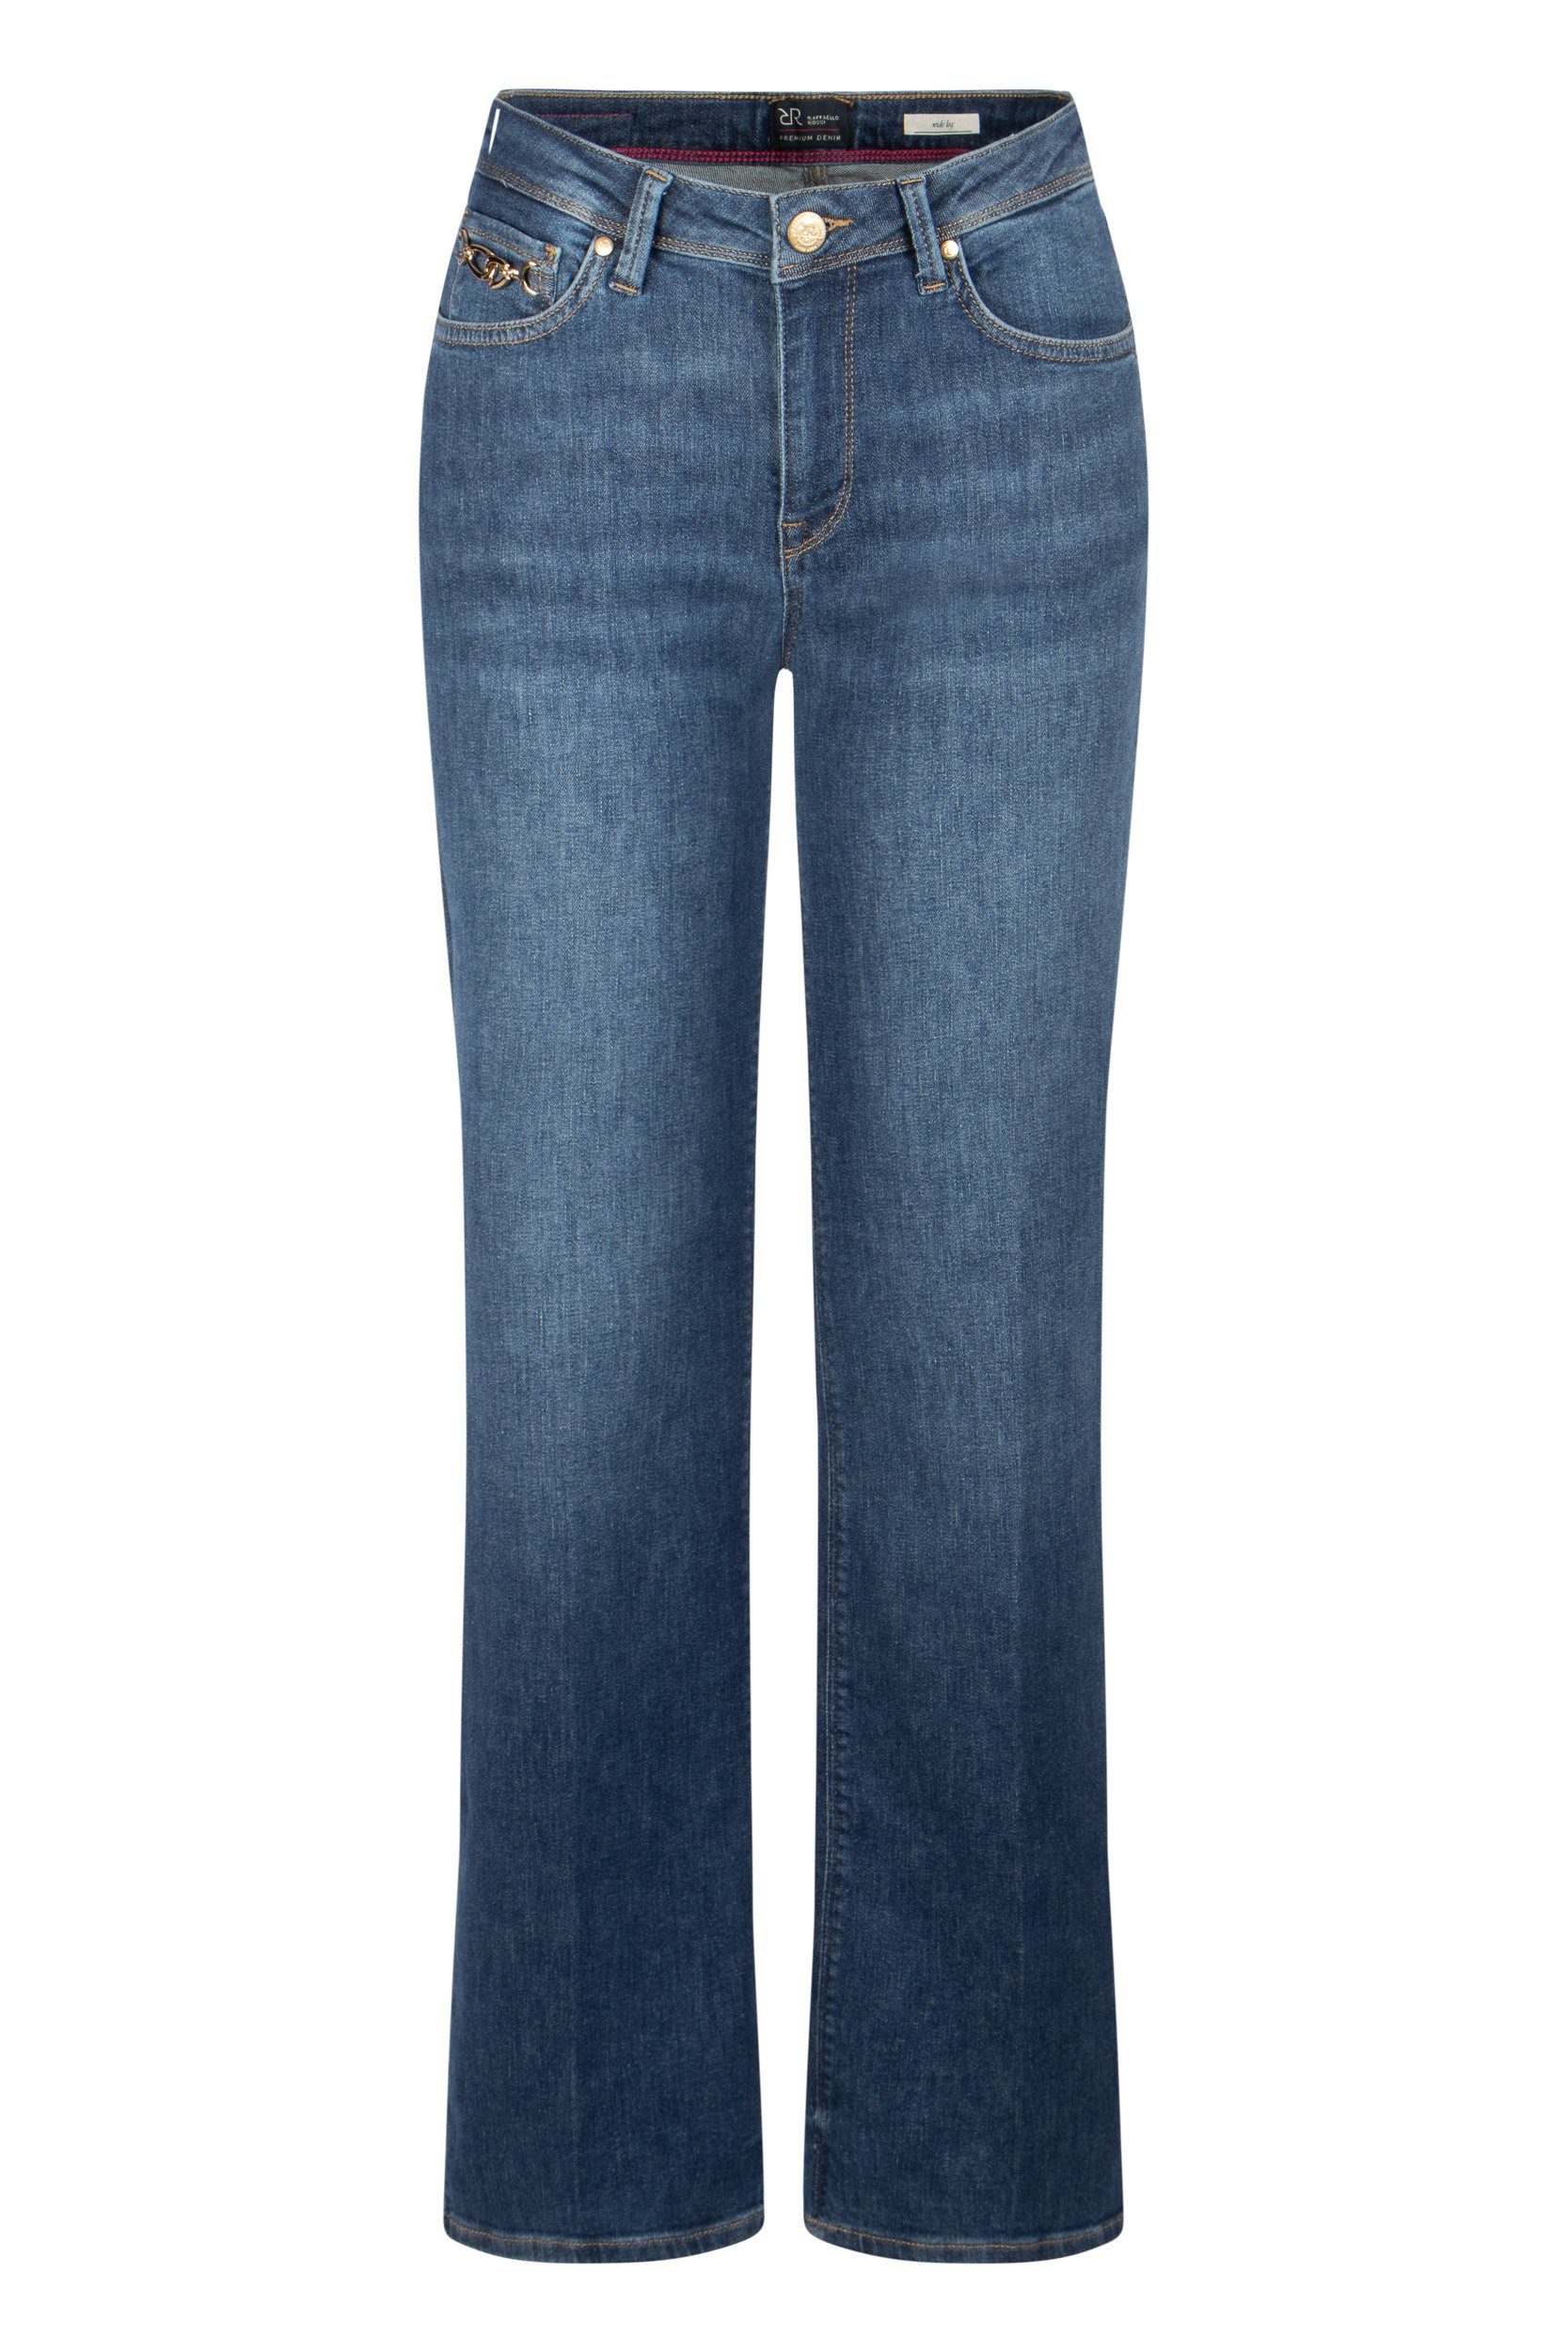 Raffaello Rossi 5-Pocket-Jeans Kira Long B